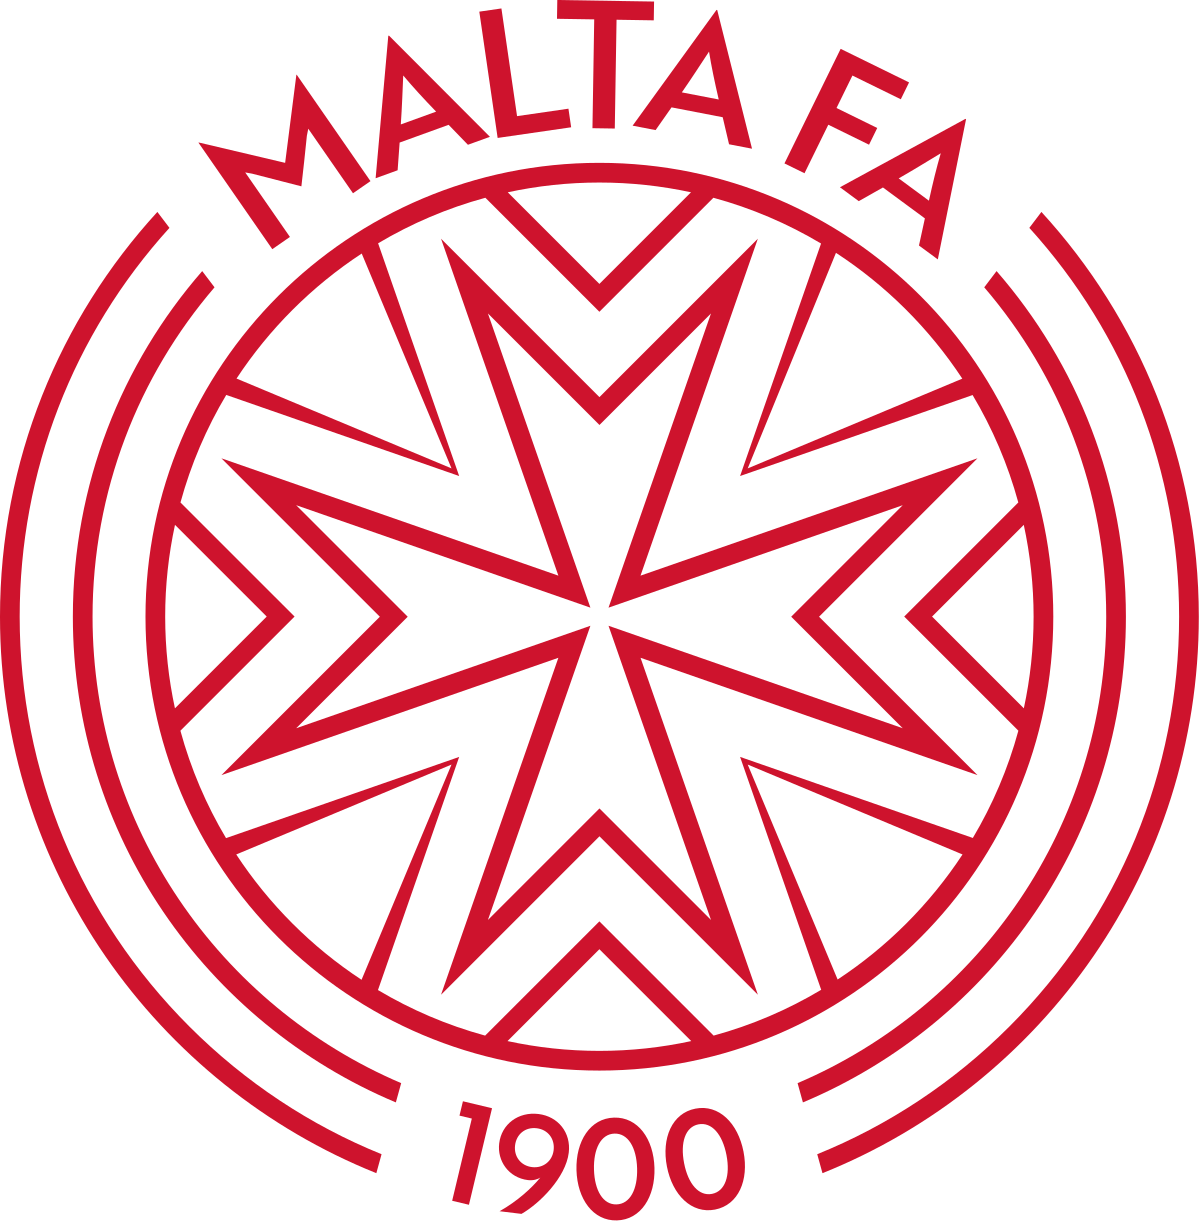 Malta Football Association - Wikipedia